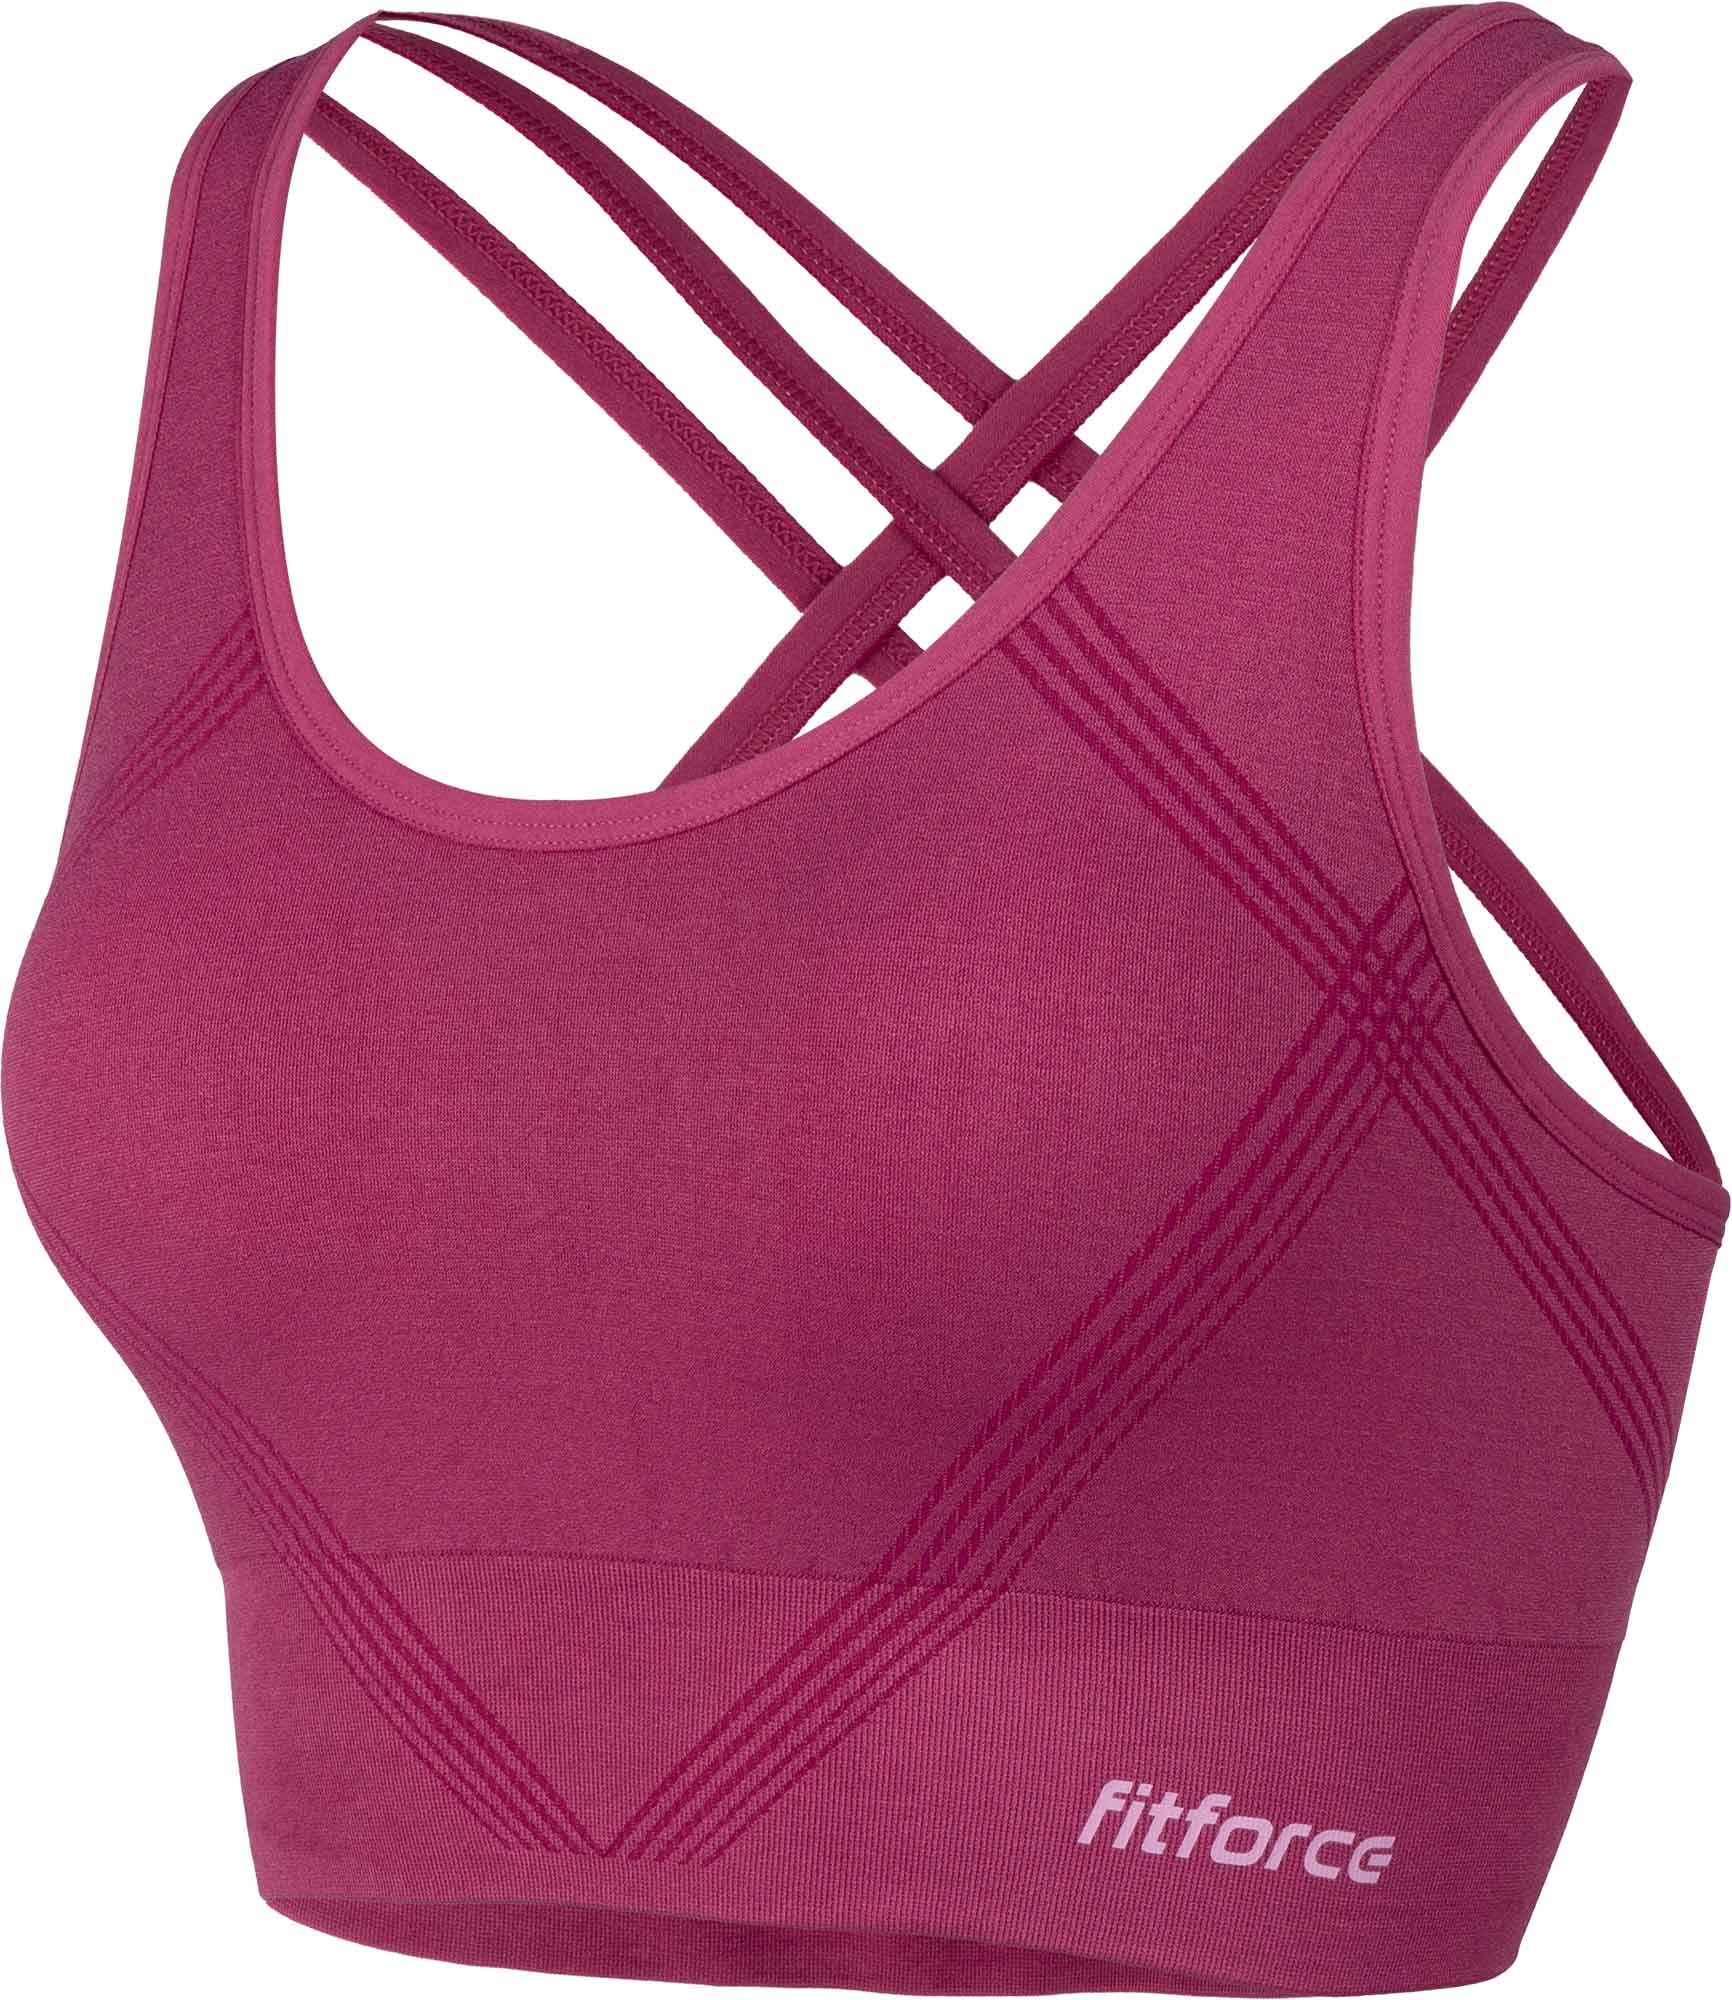 Women's fitness bra